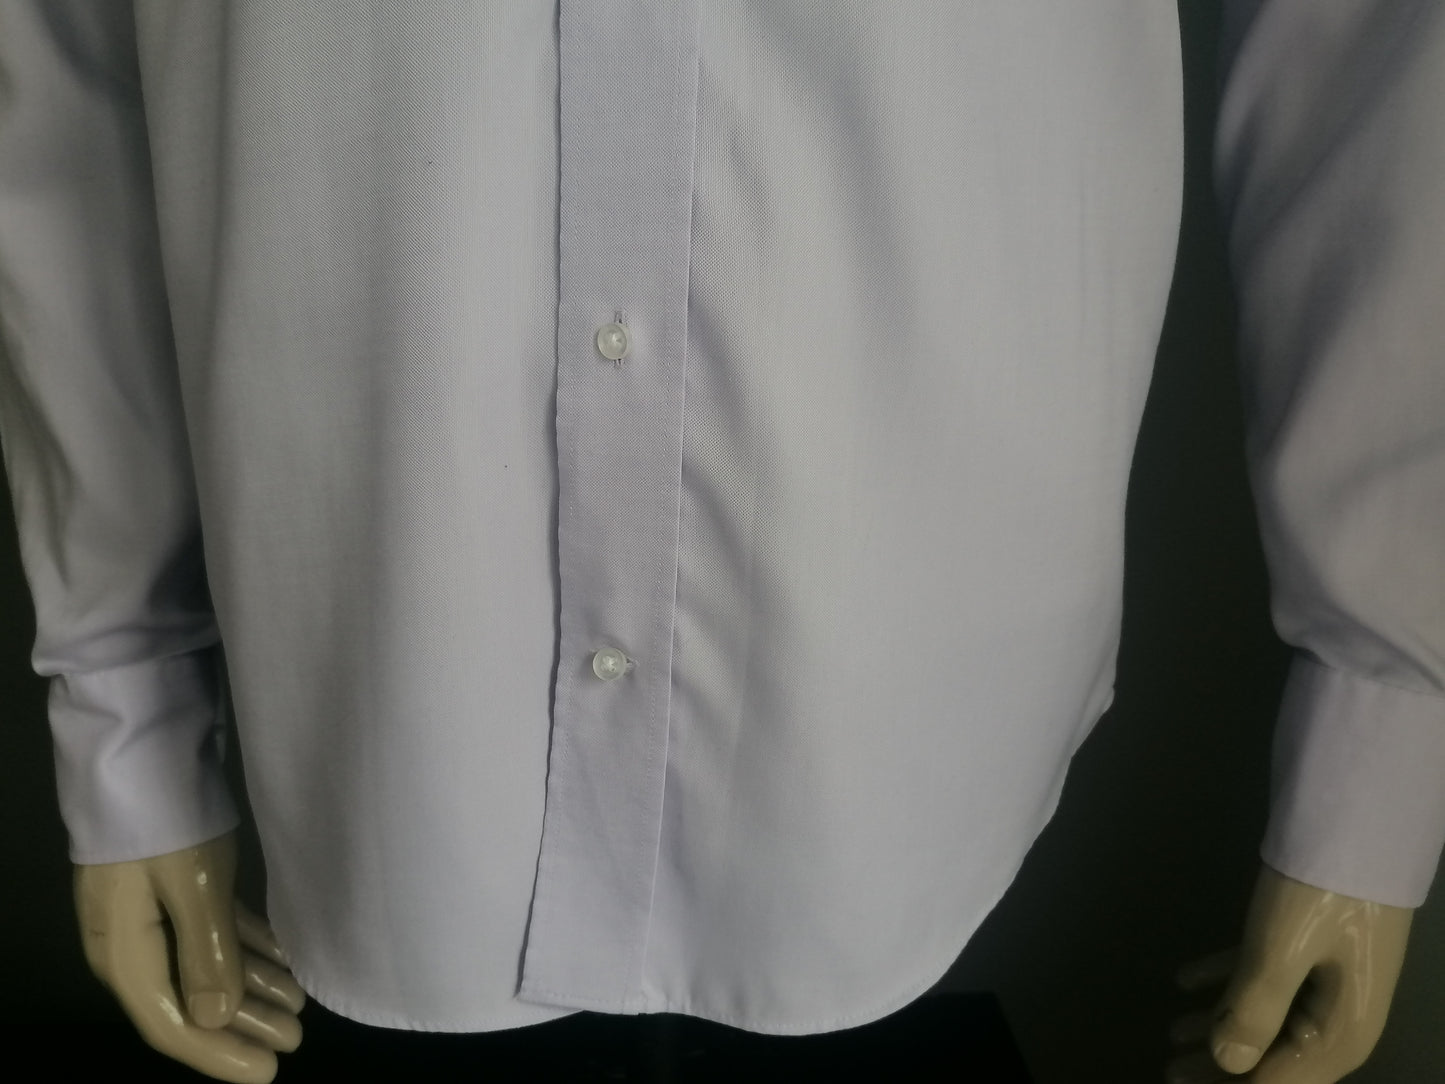 McGregor Distinction Shirt. Lila / viola chiaro colorato. Taglia 39 / M.